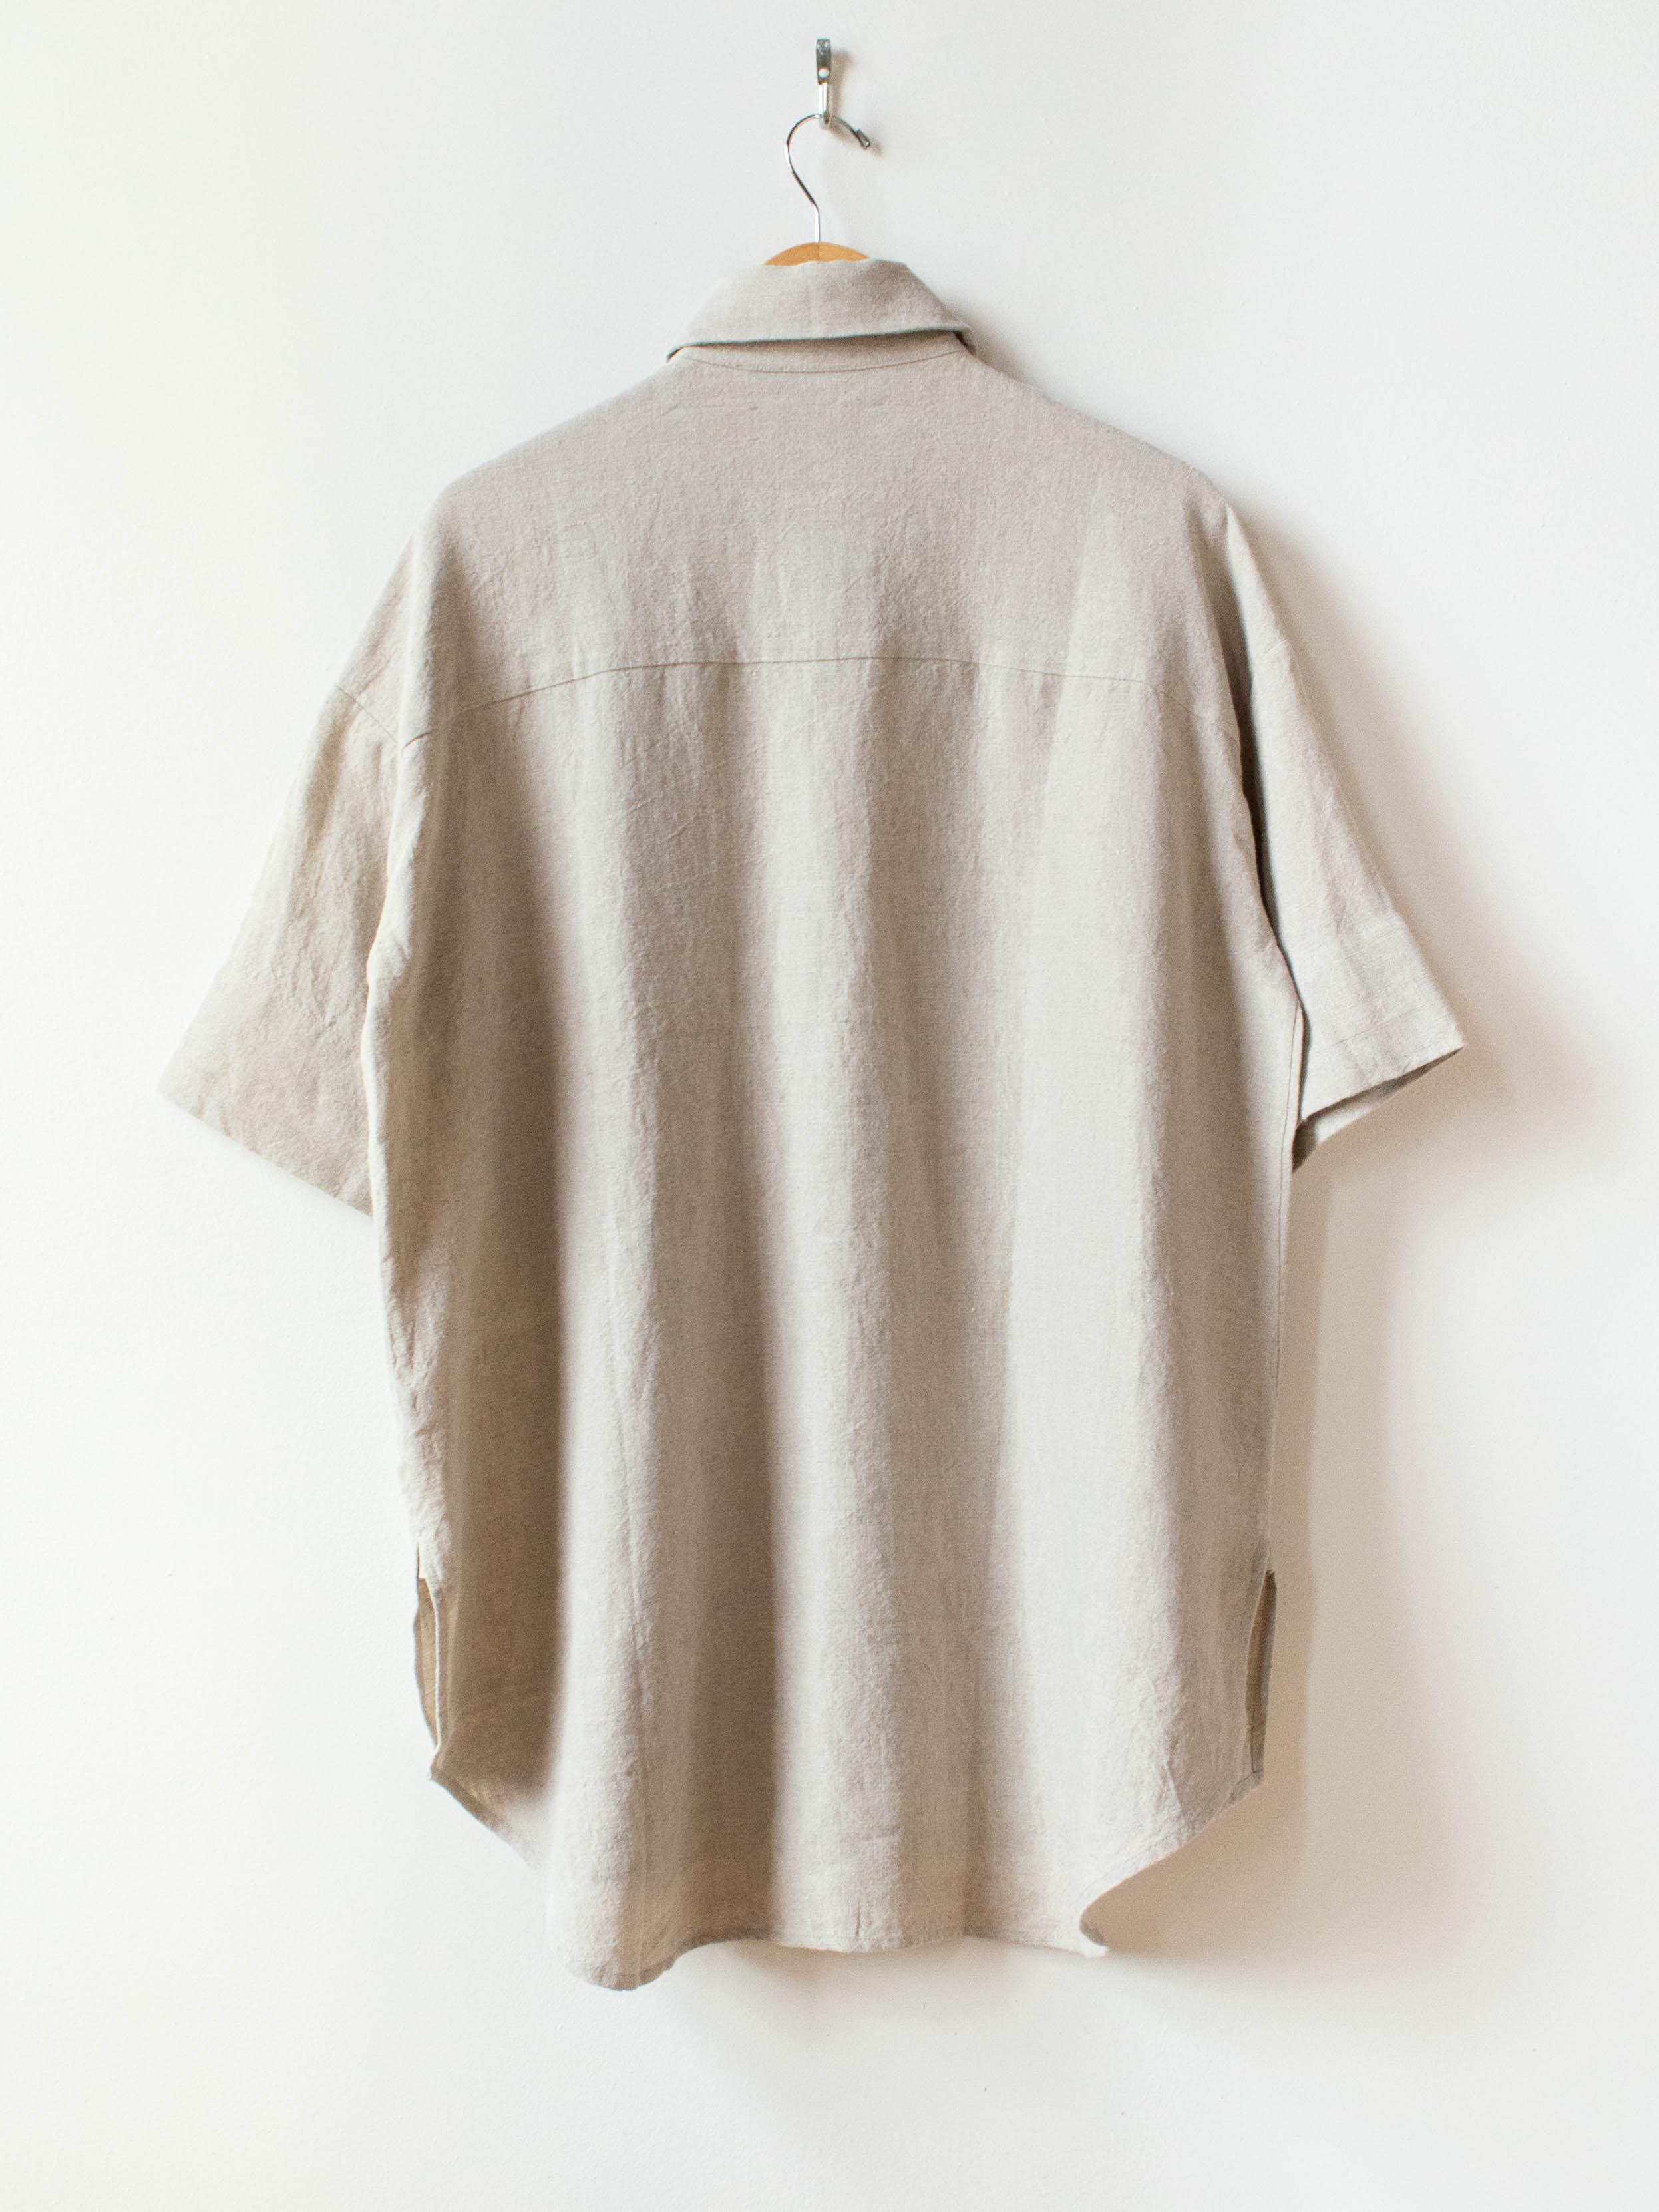 Namu Shop - Jan Machenhauer Ramo Shirt - Natural Linen